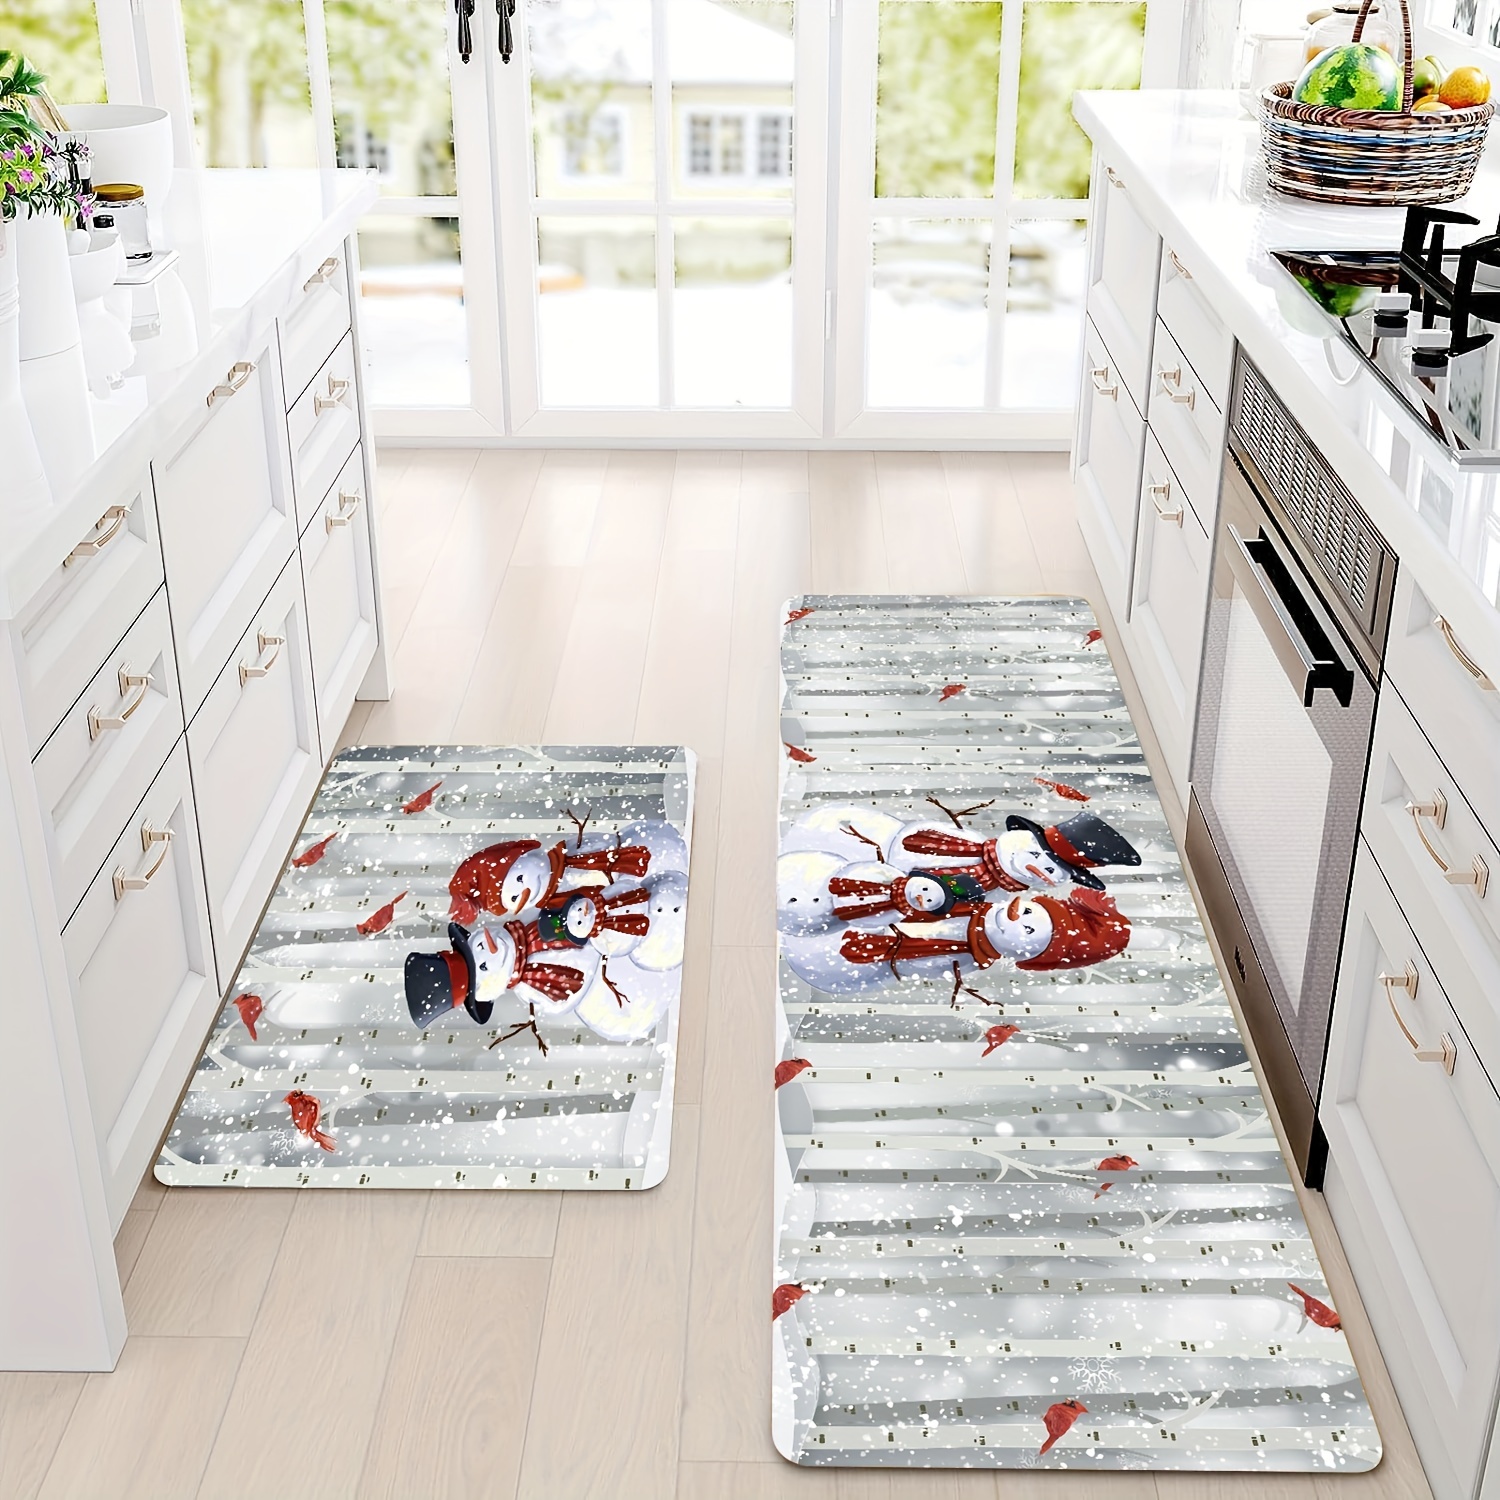 Soft Kitchen Mat, Christmas Gnome Non-slip Oil-proof Floor Mat